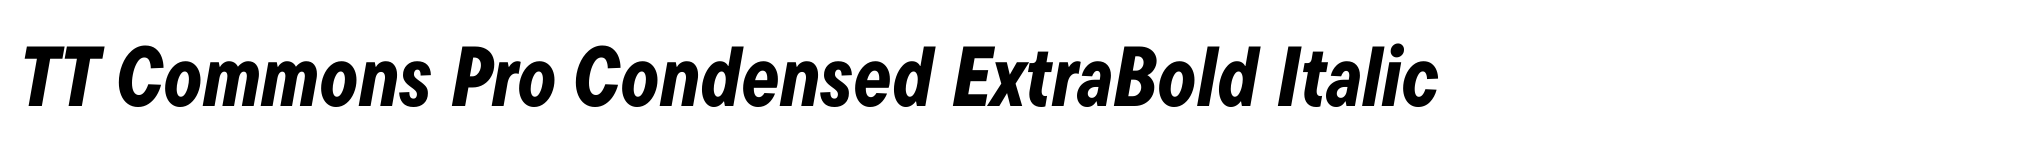 TT Commons Pro Condensed ExtraBold Italic image